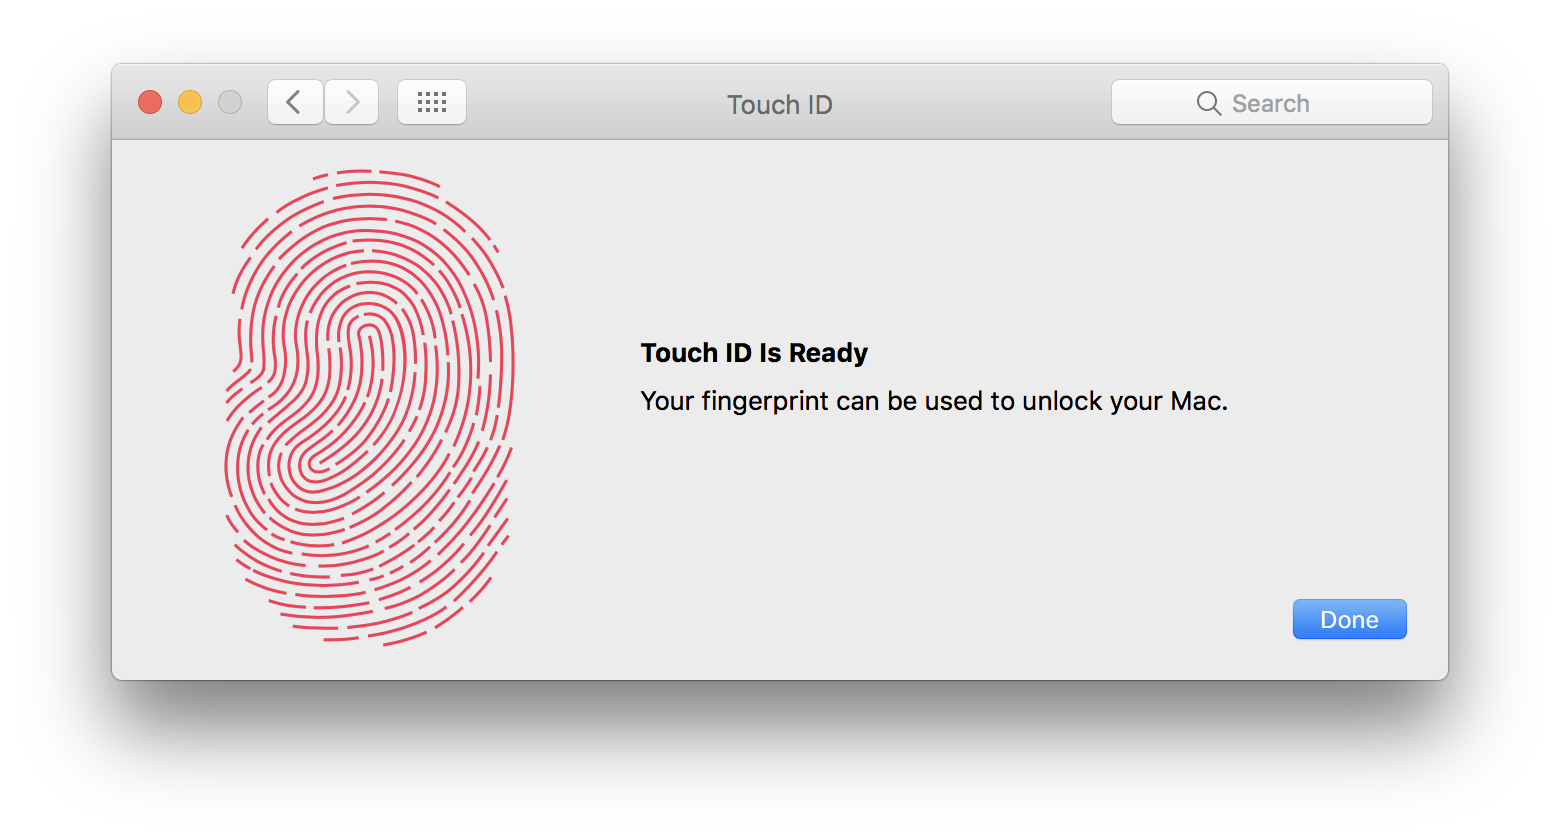 macos-system-preferences-touch-id-scan-fingerprint-mac-screenshot-002